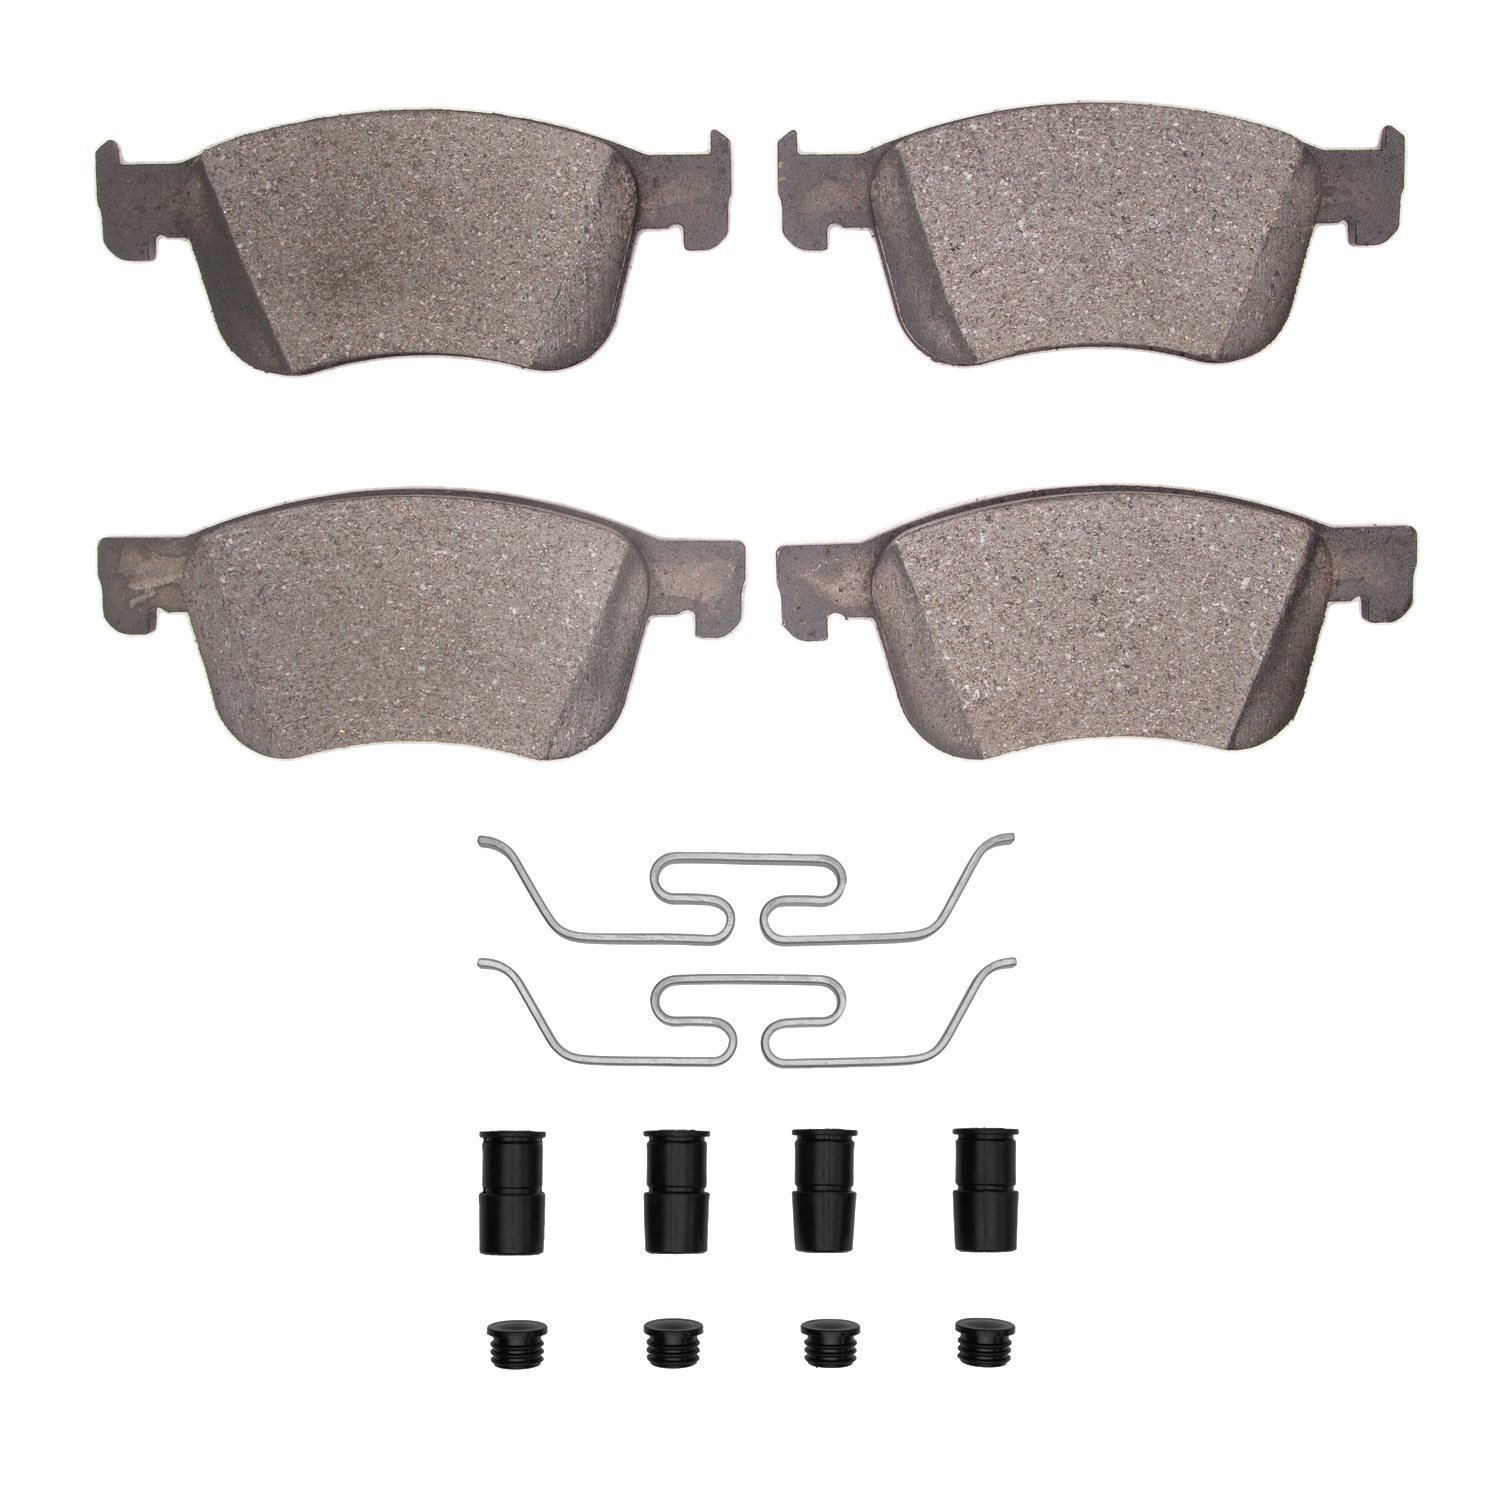 1310-2115-01 3000-Series Ceramic Brake Pads & Hardware Kit, Fits Select Acura/Honda, Position: Front